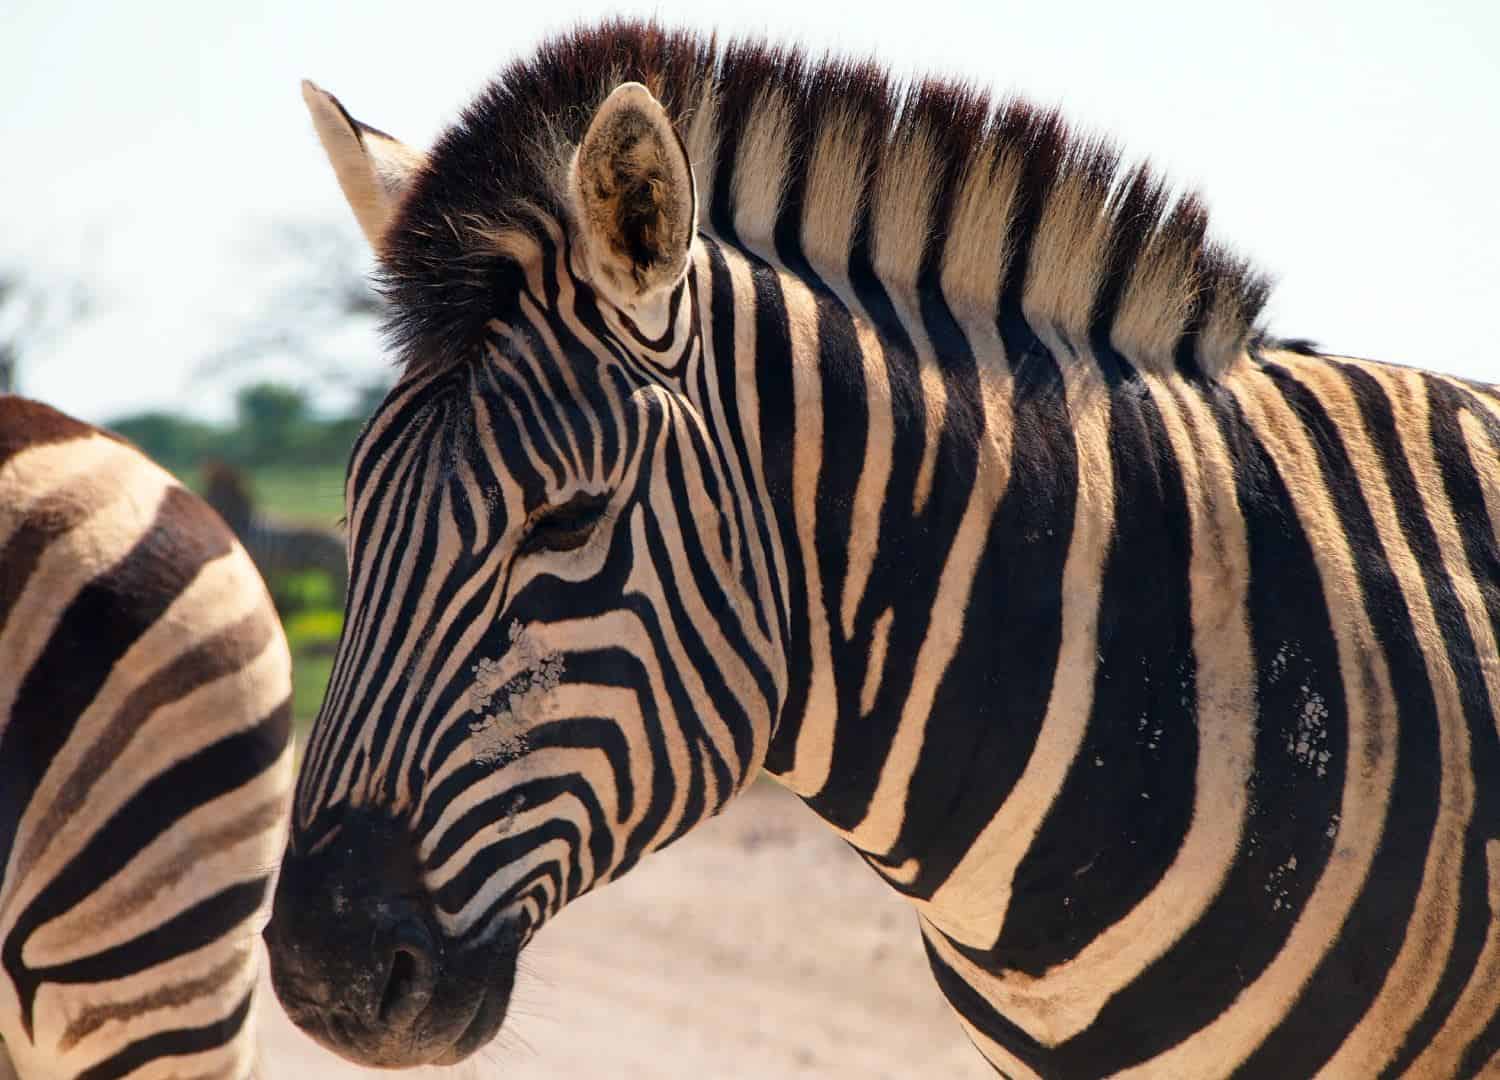 Zebra face up close in Namibia